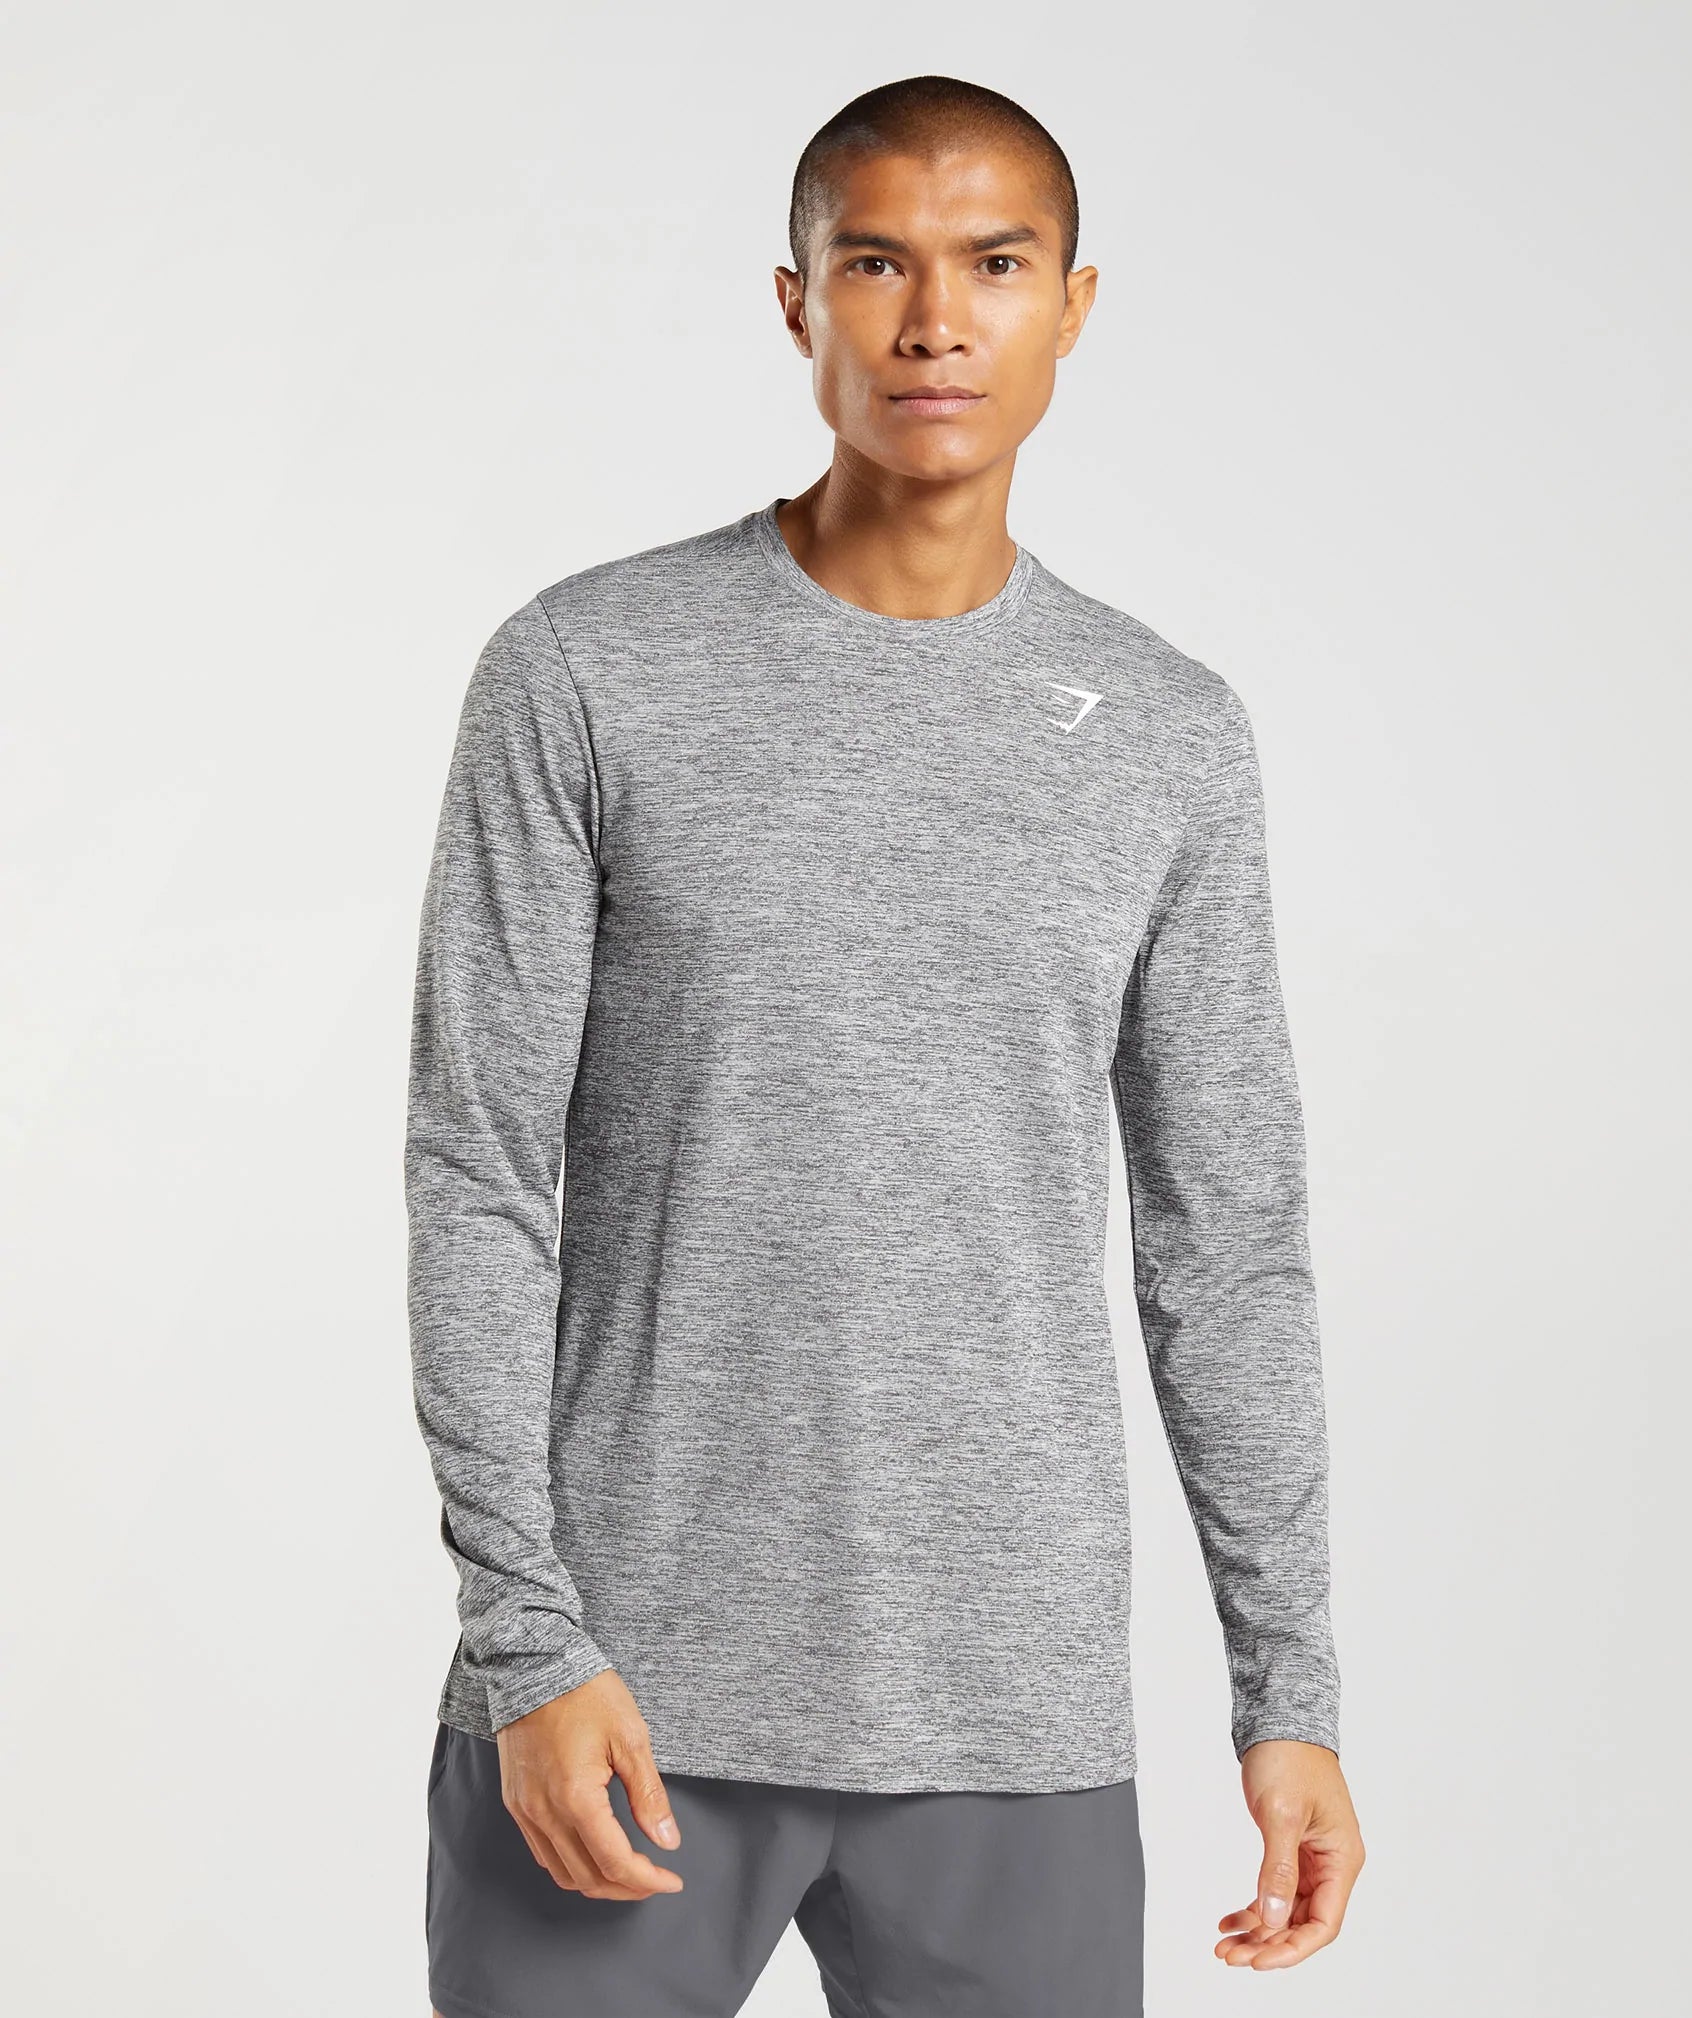 GetUSCart- Neleus Men's 3 Pack Dry Fit Running Shirt Long Sleeve Workout  Athletic Shirts with Hoods,5071 Dark Grey,Light Grey,Slate Grey,3XL